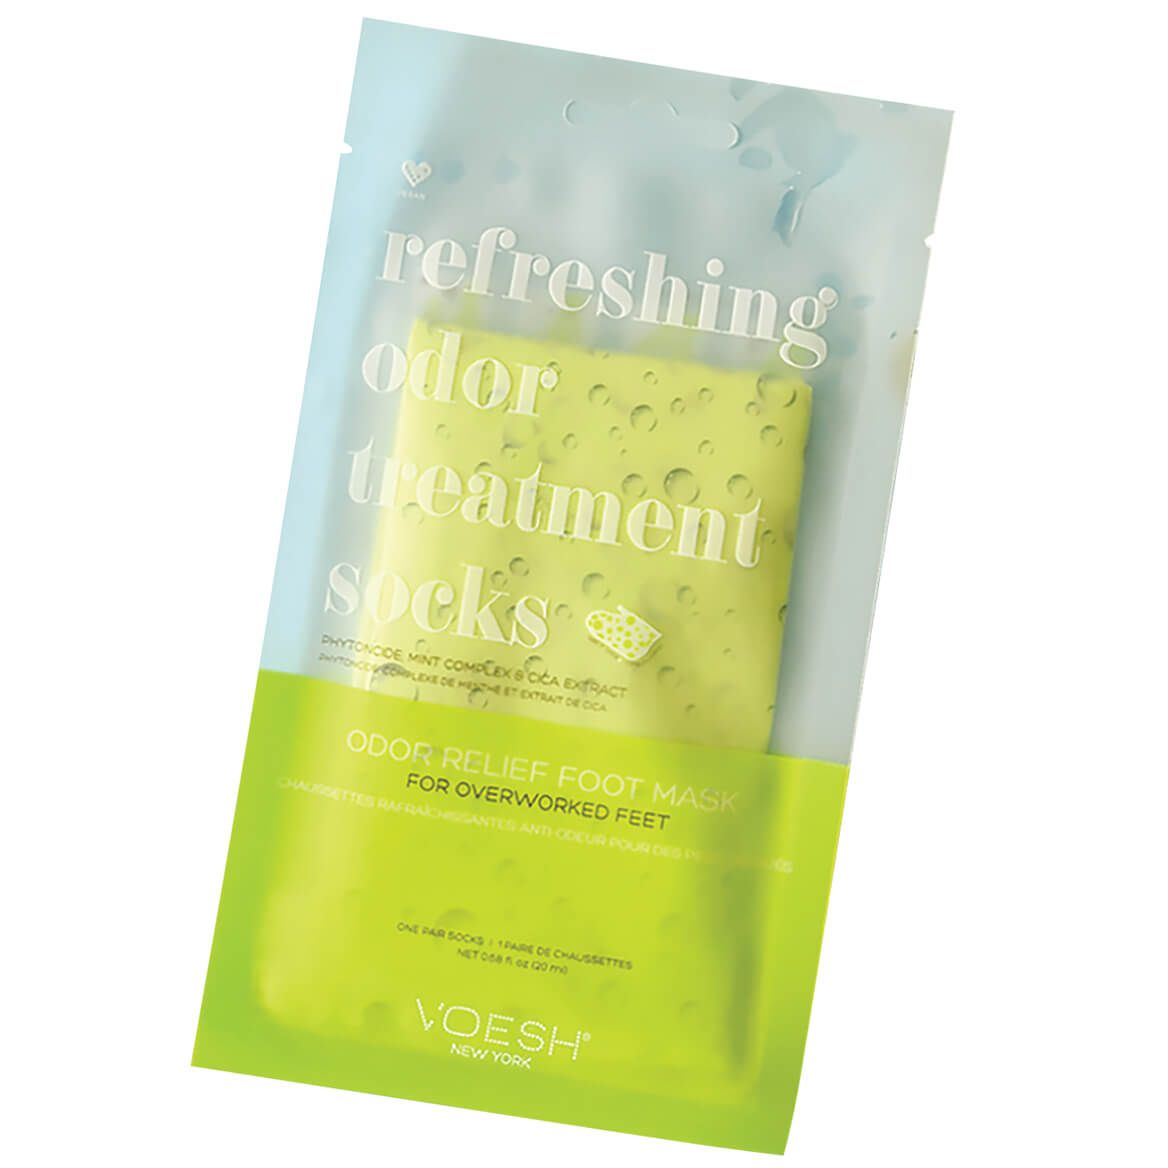 Refreshing Odor Treatment Socks + '-' + 371250